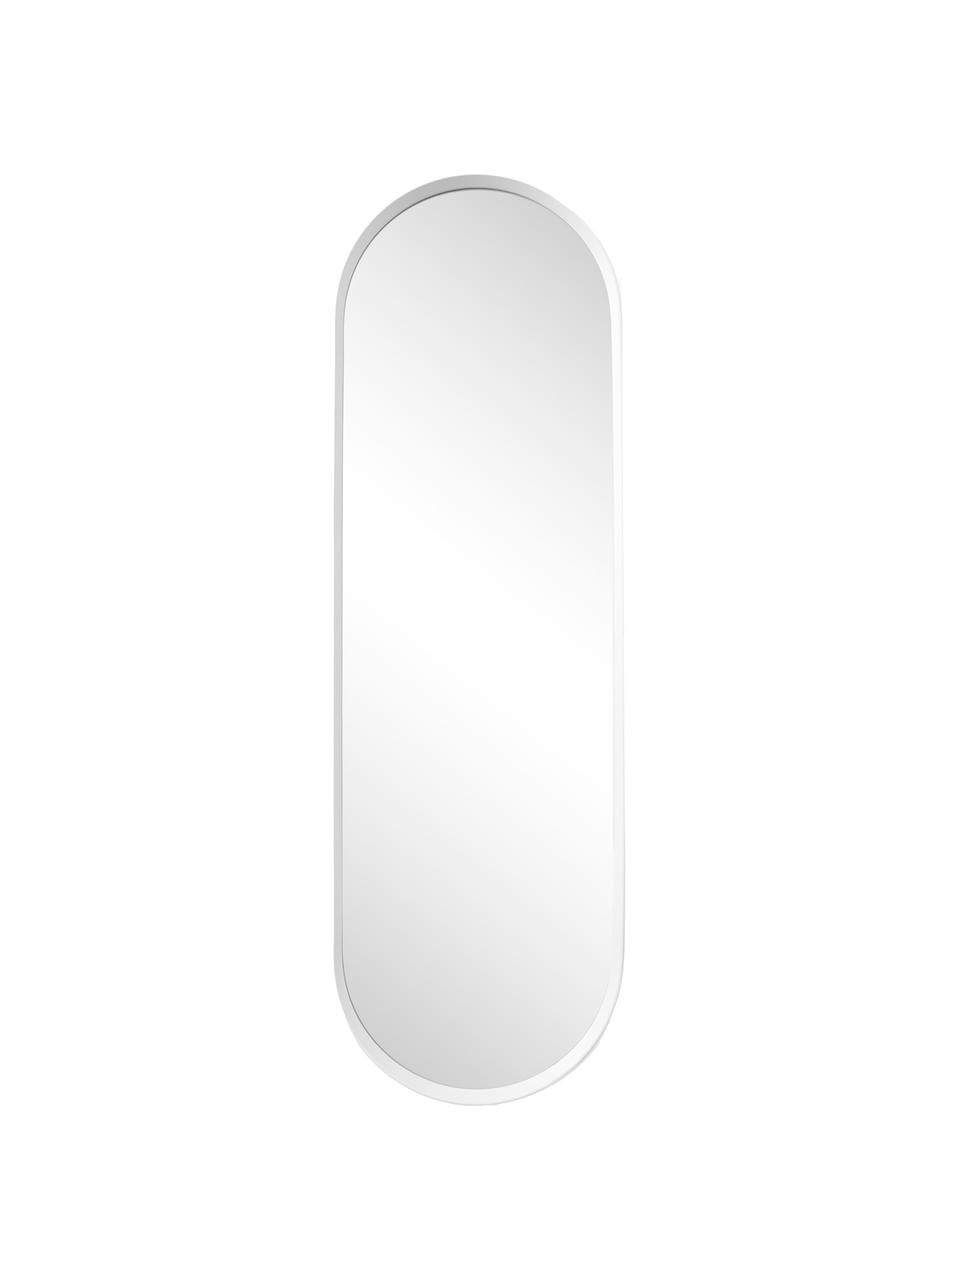 Espejo de pared ovalado Norm, Espejo: cristal, Blanco, An 40 x Al 130 cm